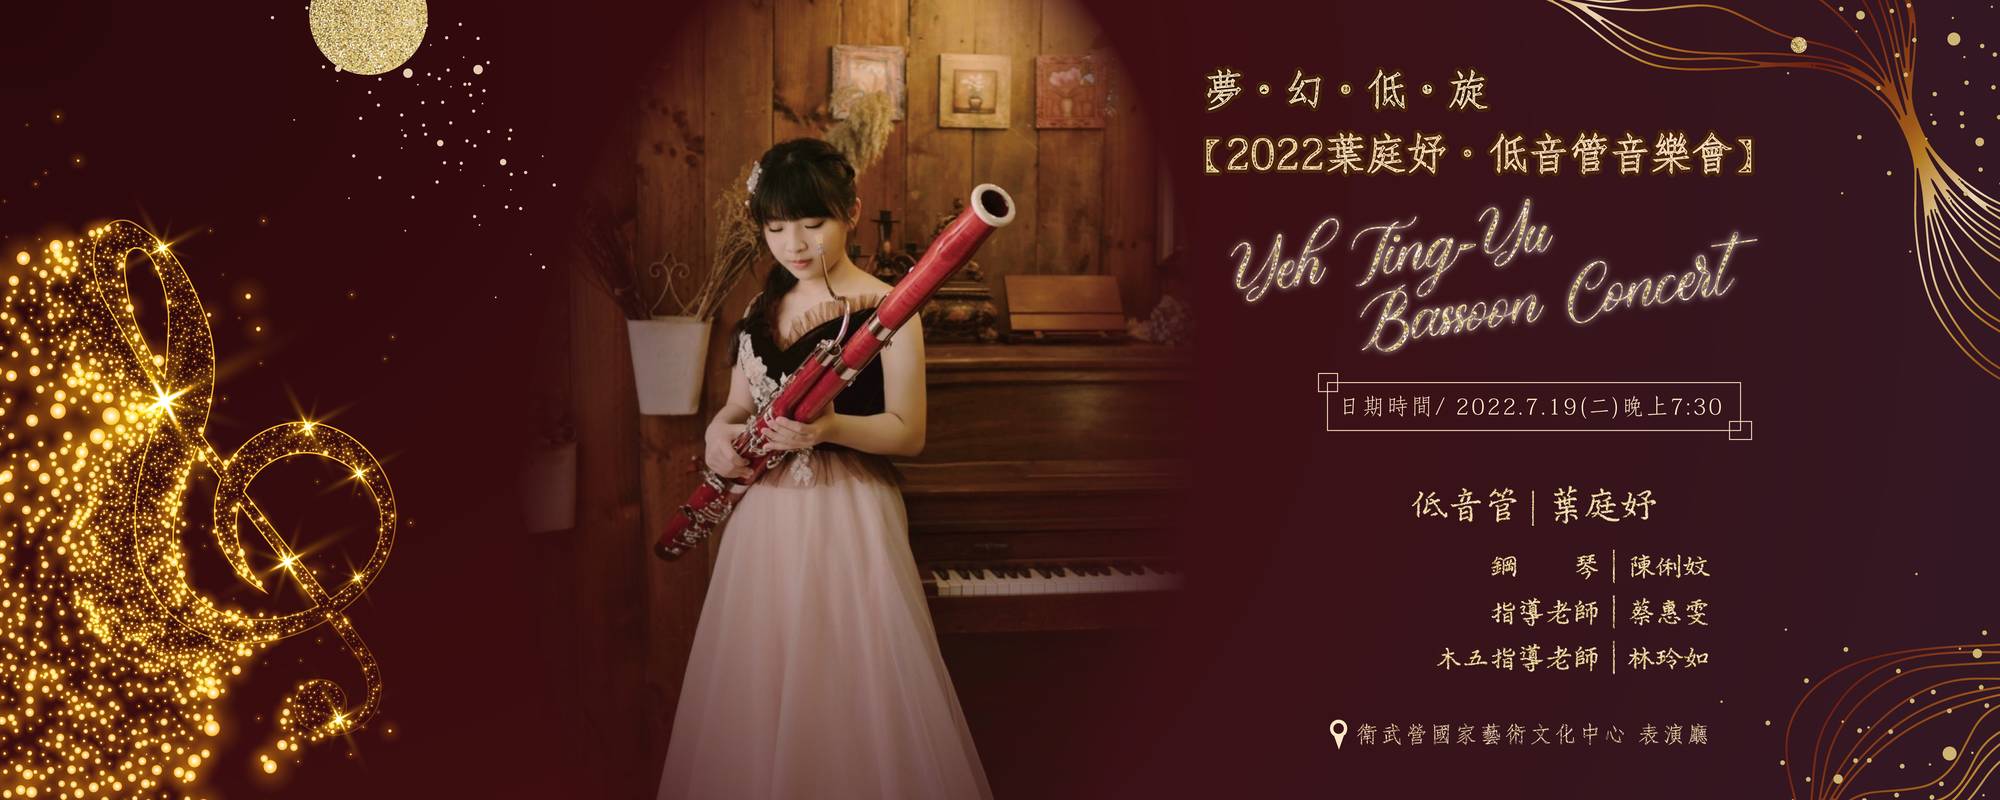 YEH, Ting-Yu Bassoon Concert